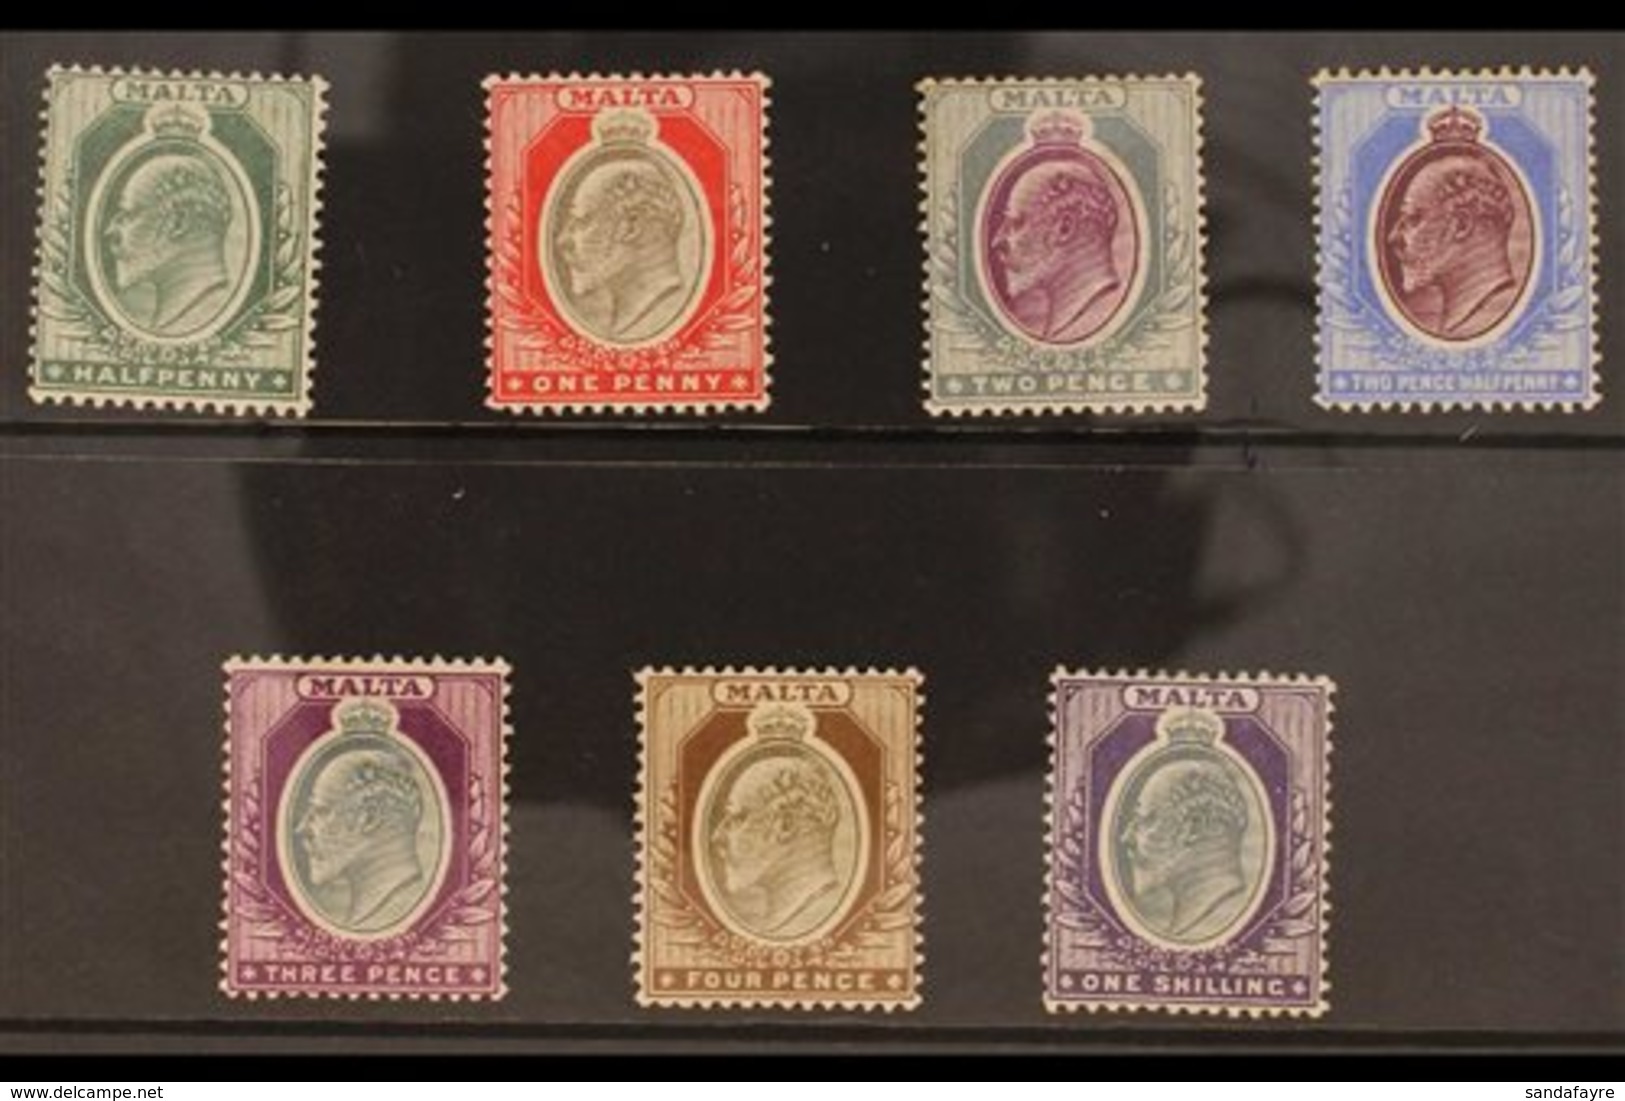 1903-04 KEVII (wmk Crown CA) Complete Set, SG 38/44, Fine Mint. (7 Stamps) For More Images, Please Visit Http://www.sand - Malta (...-1964)